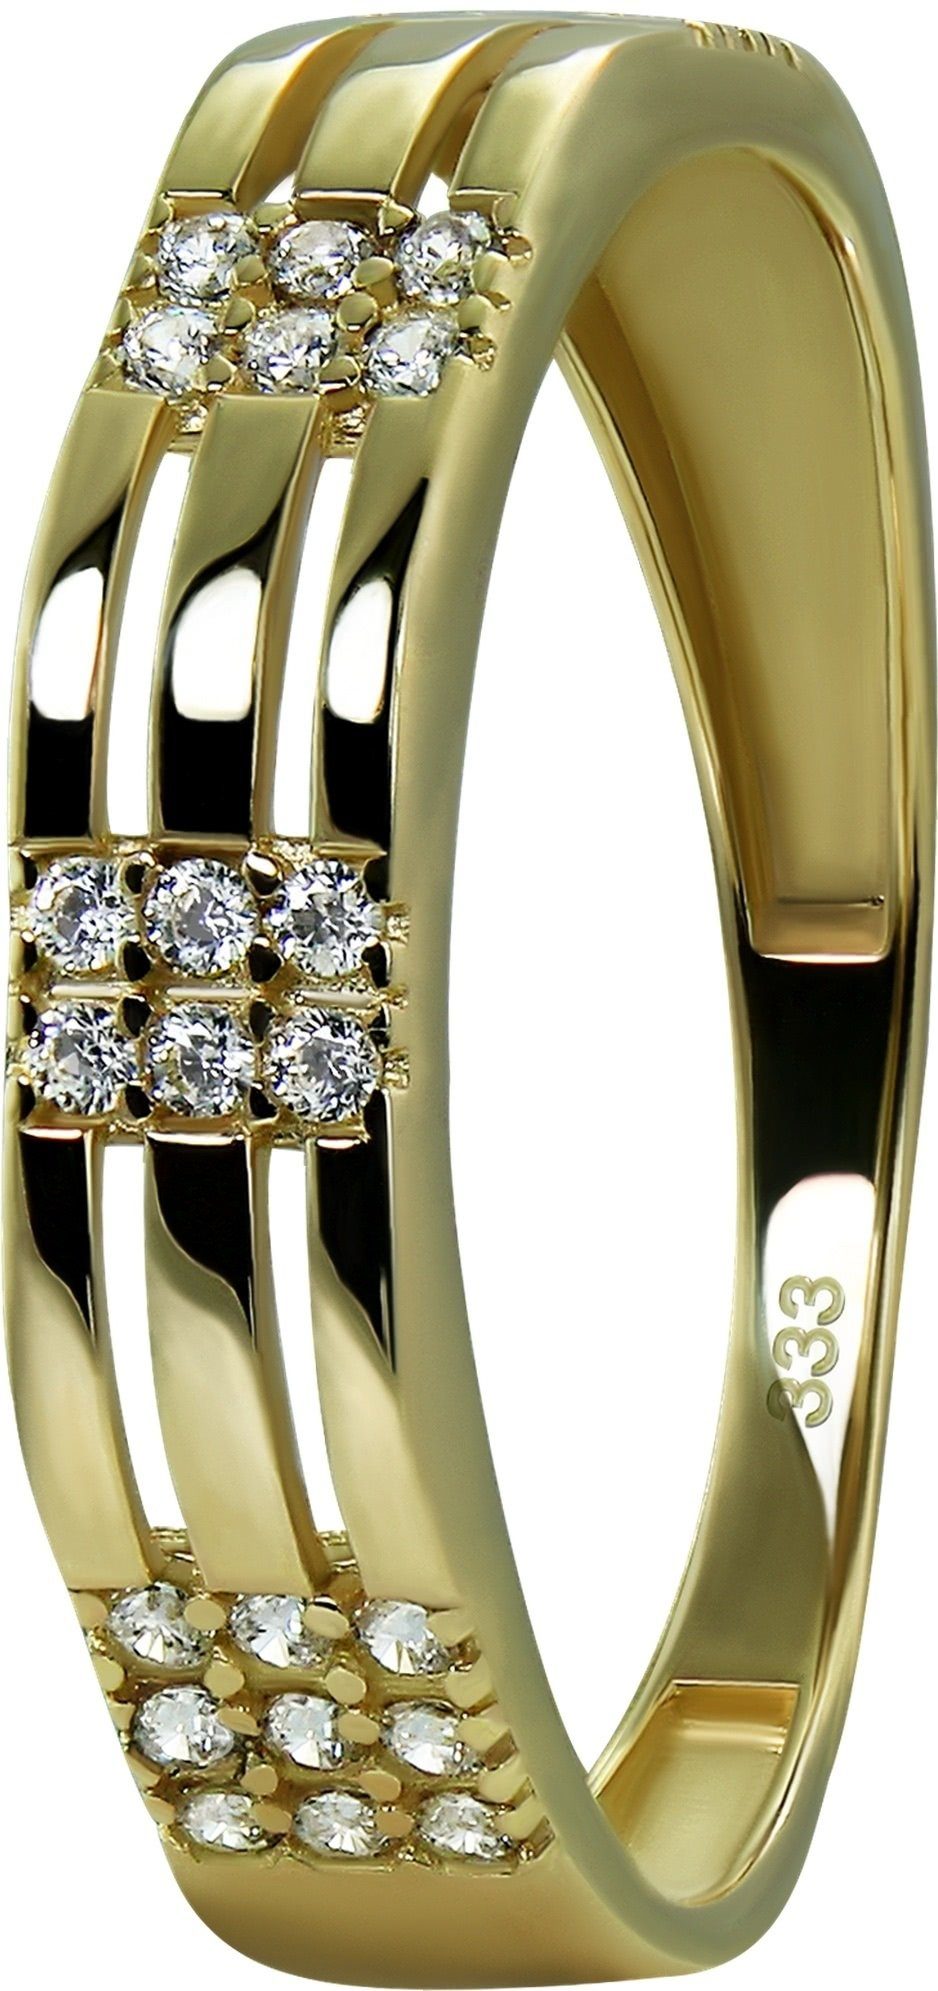 GoldDream Goldring GoldDream Gold Ring Sparkle Gr.54 (Fingerring), Damen Ring Sparkle 333 Gelbgold - 8 Karat, Farbe: gold, weiß